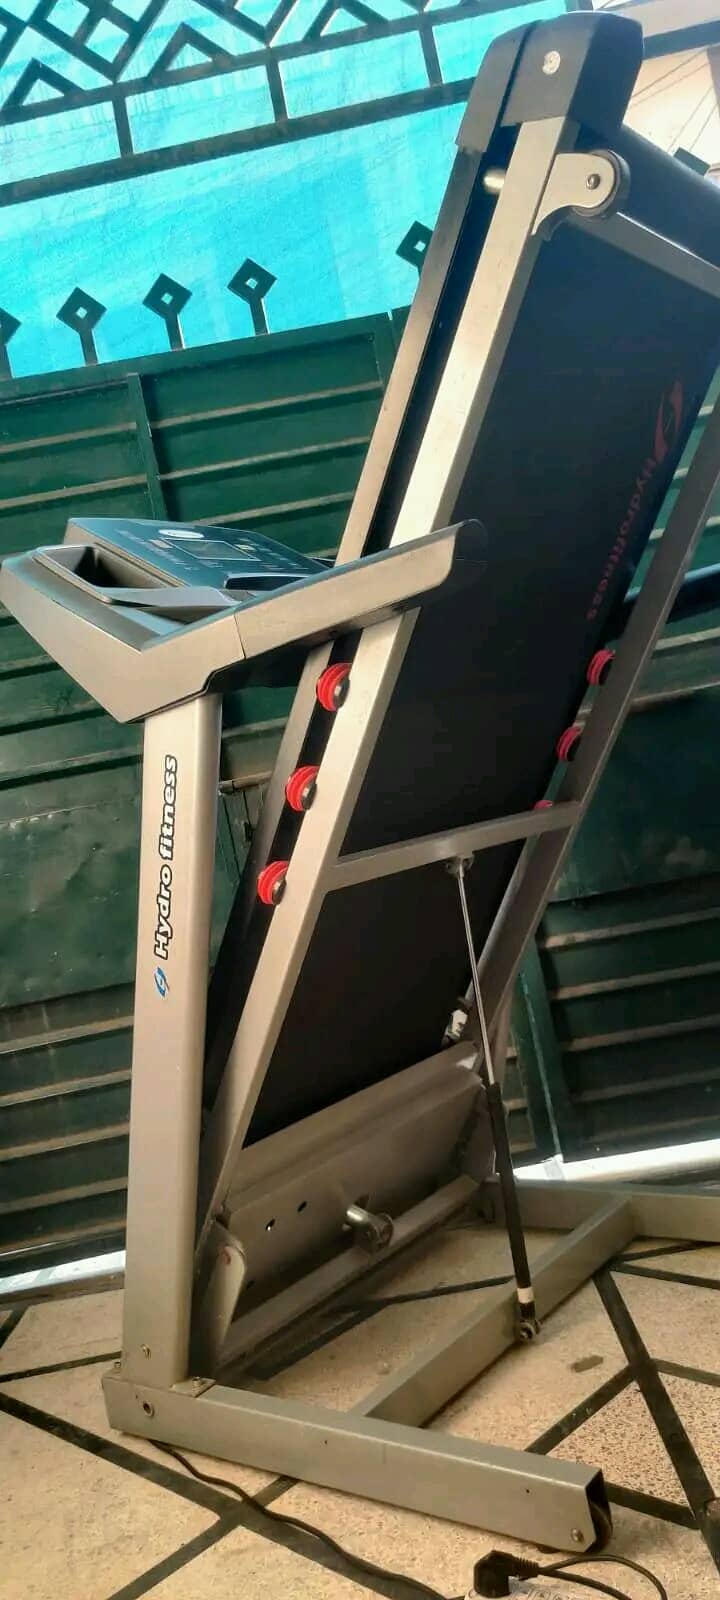 Hydro fitness treadmill for sale 0316/1736/128 whatsapp 12